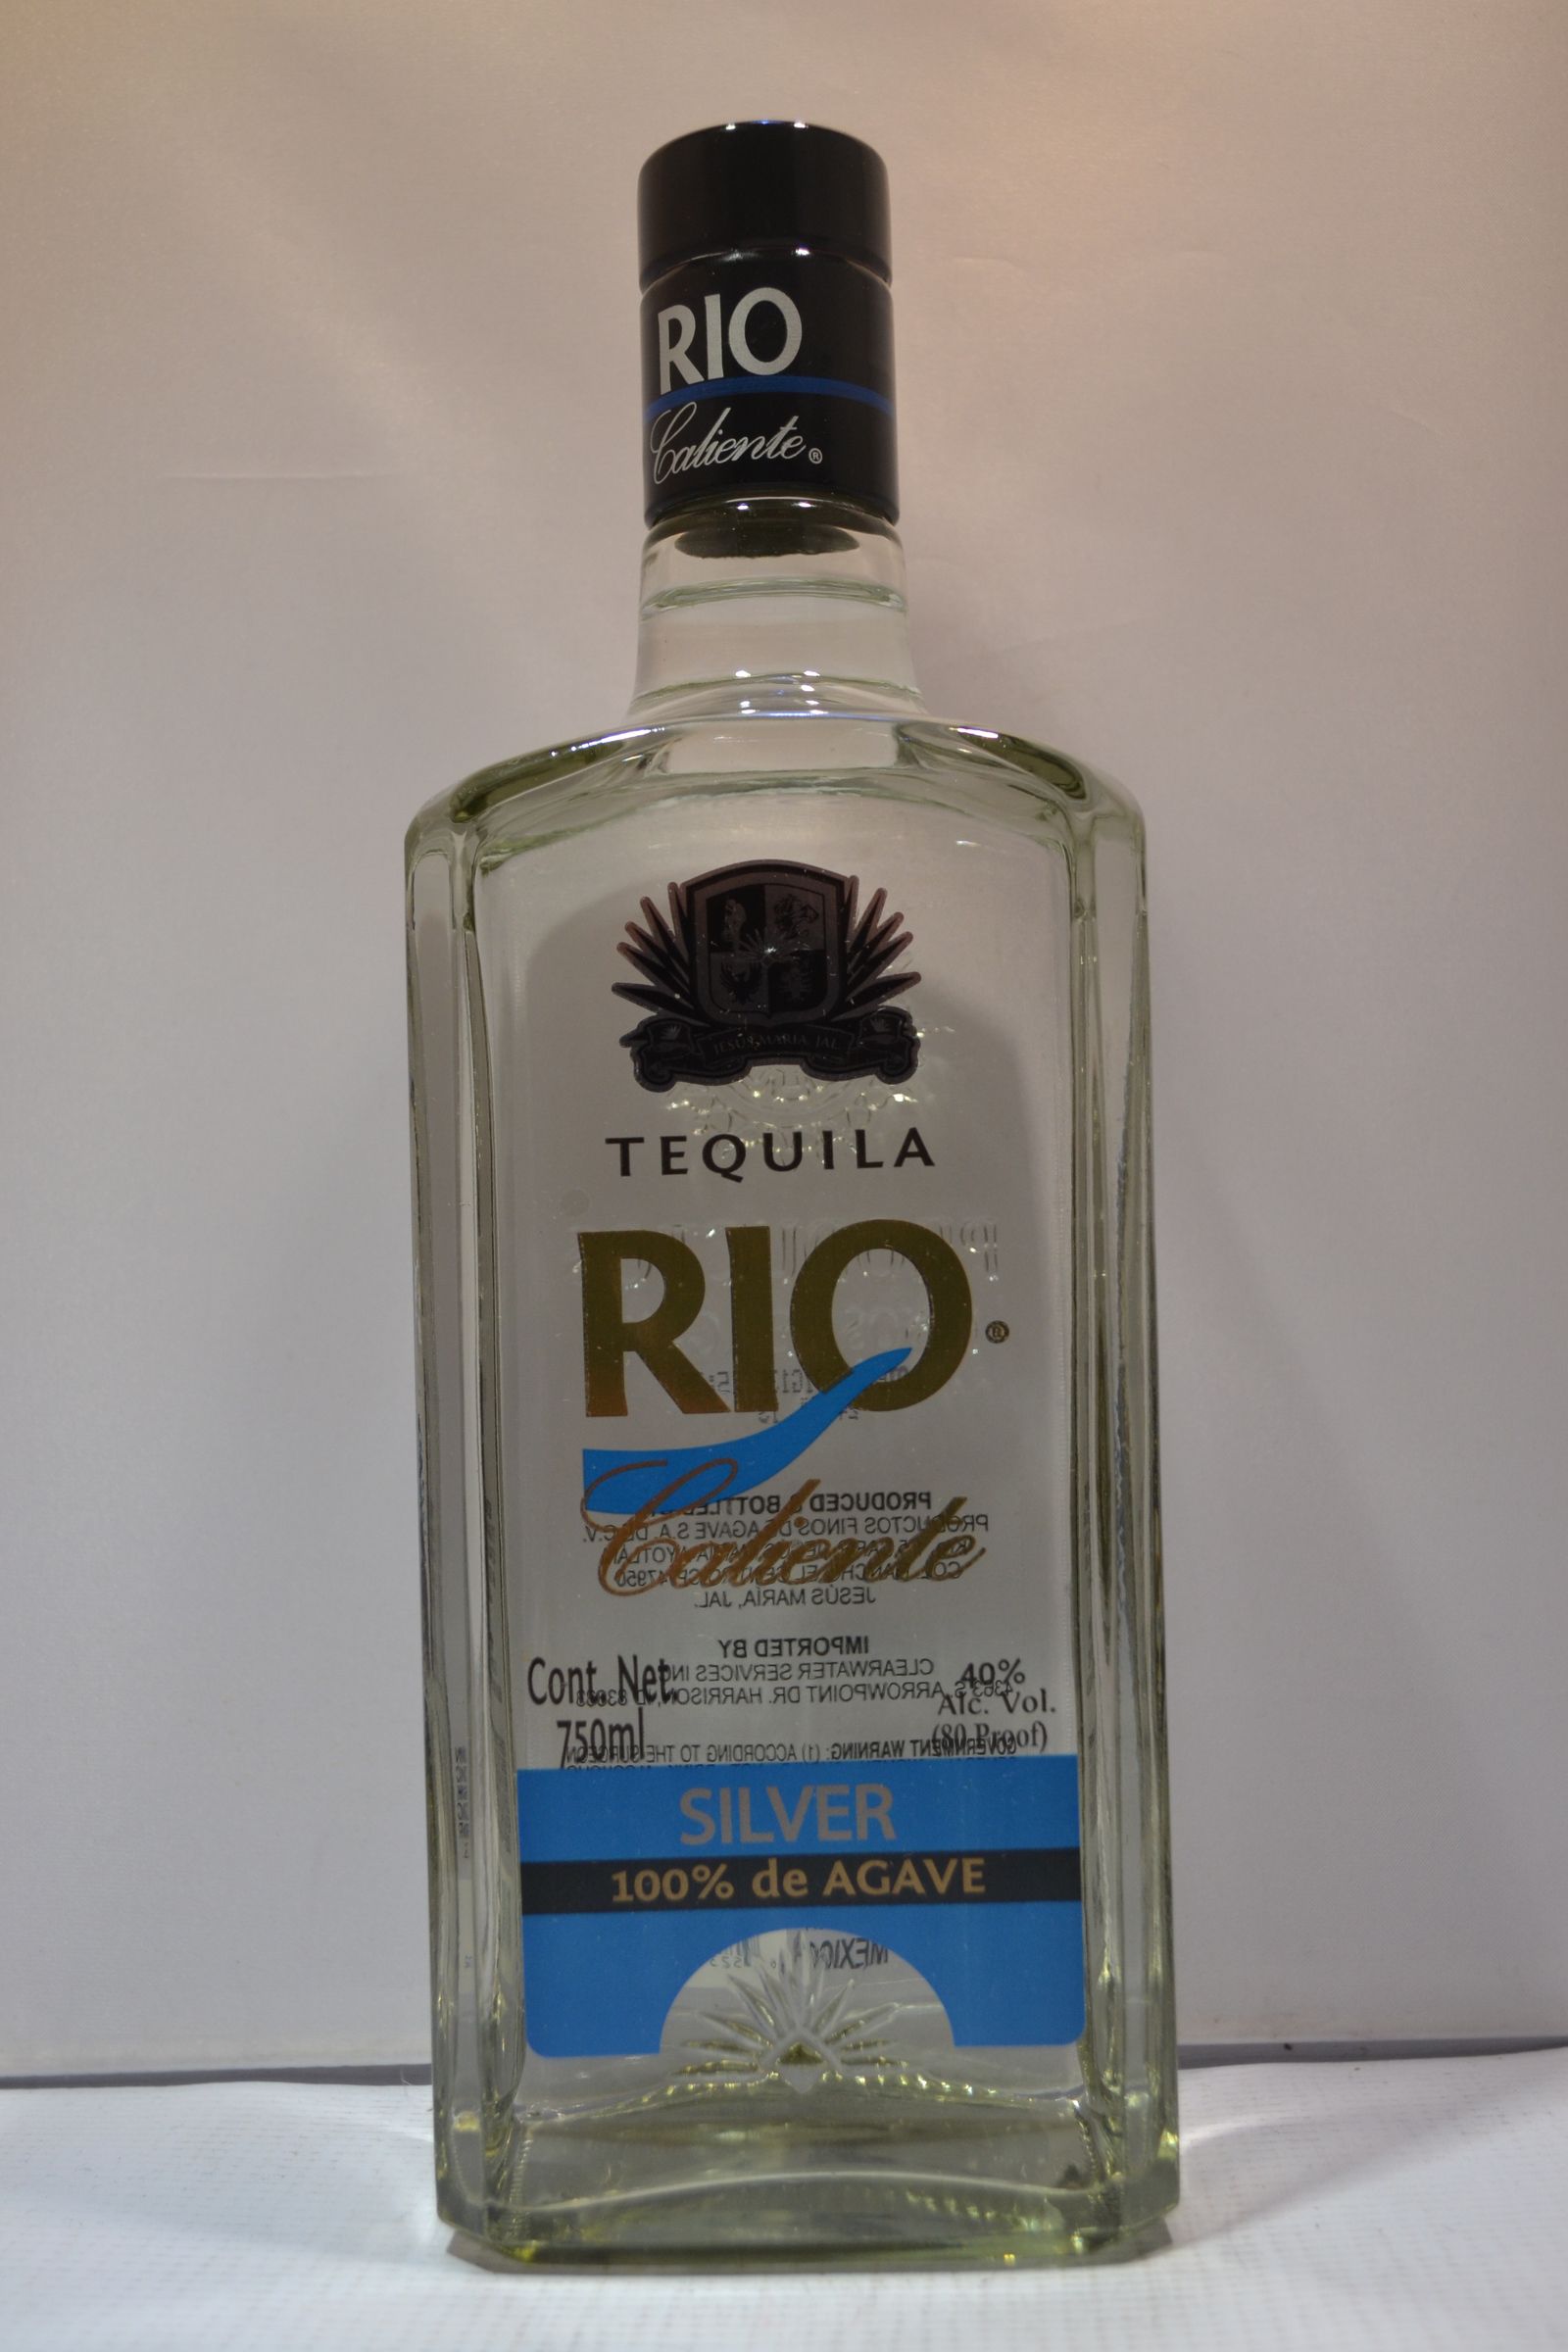 RIO CALIENTE TEQUILA SILVER 750ML - Remedy Liquor